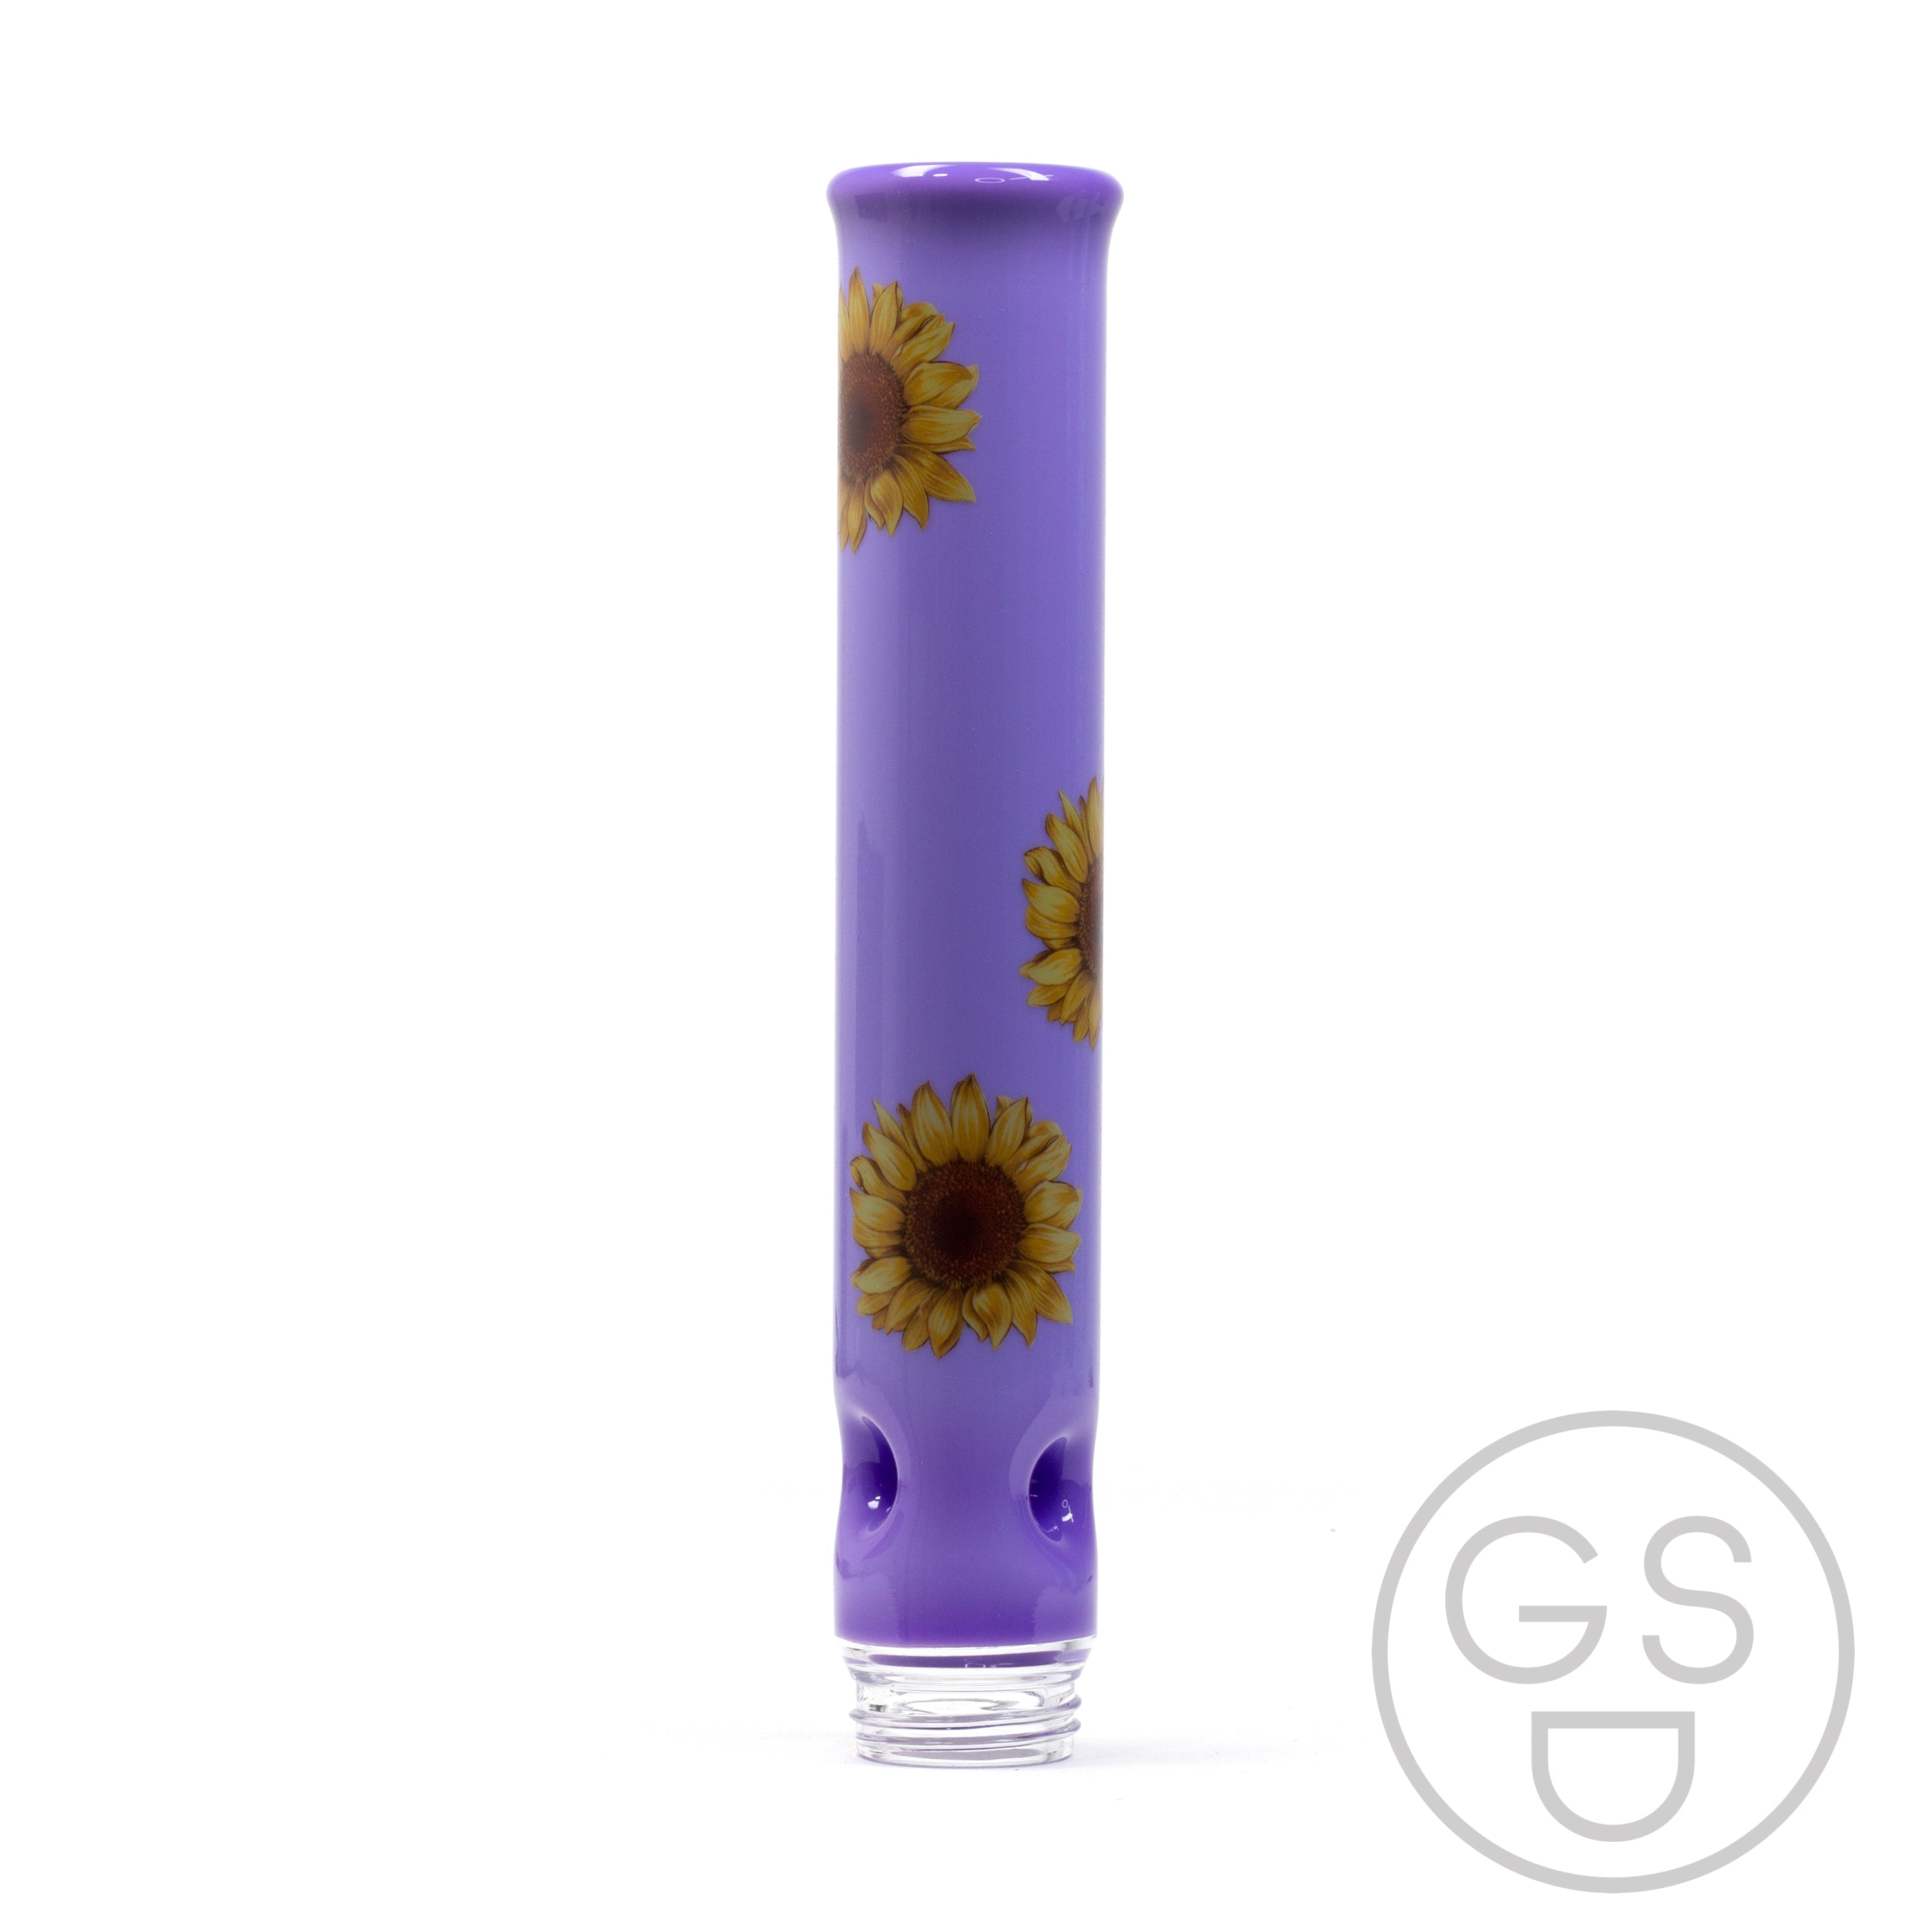 Prism Modular Waterpipe Tall Mouthpiece - Sunflower / Grape Taffy